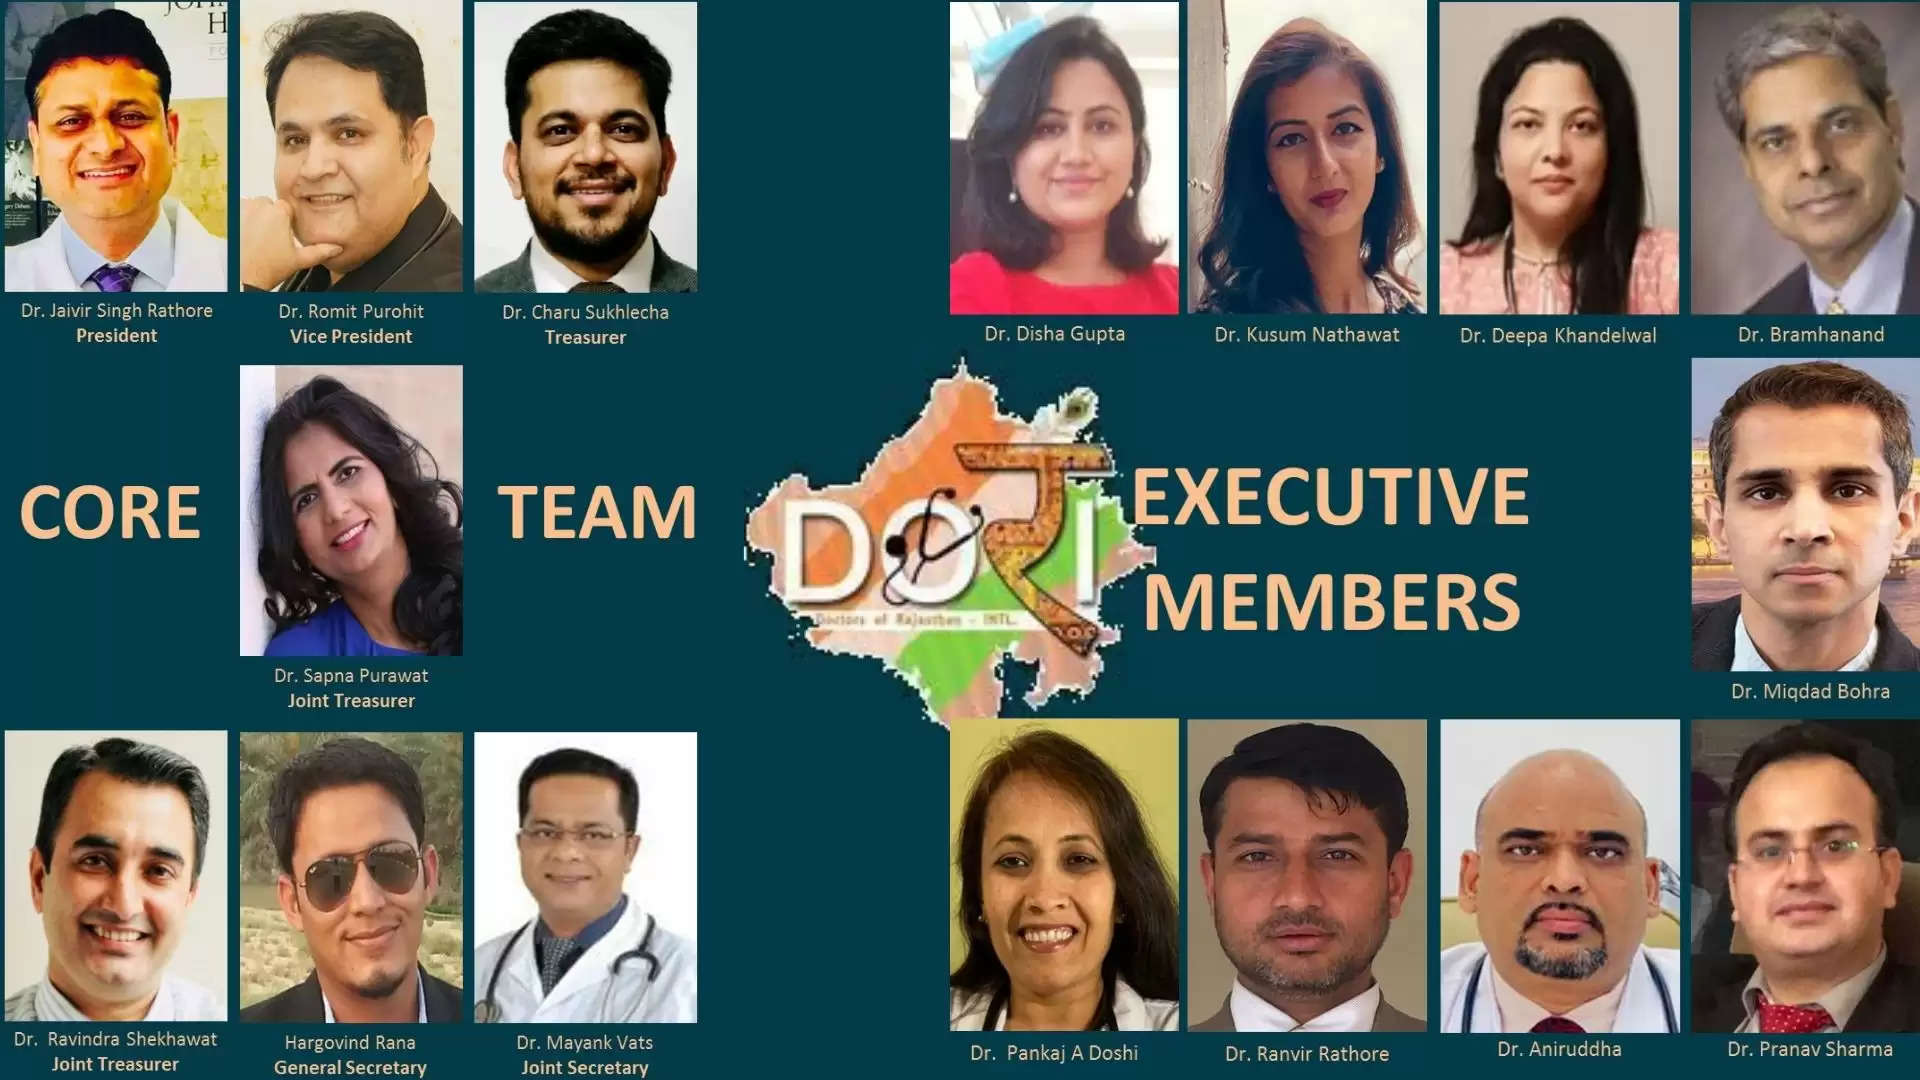 Doctors of Rajasthan International DORI Life of a Doctor WondrX Free Assistance for Overseas Internship